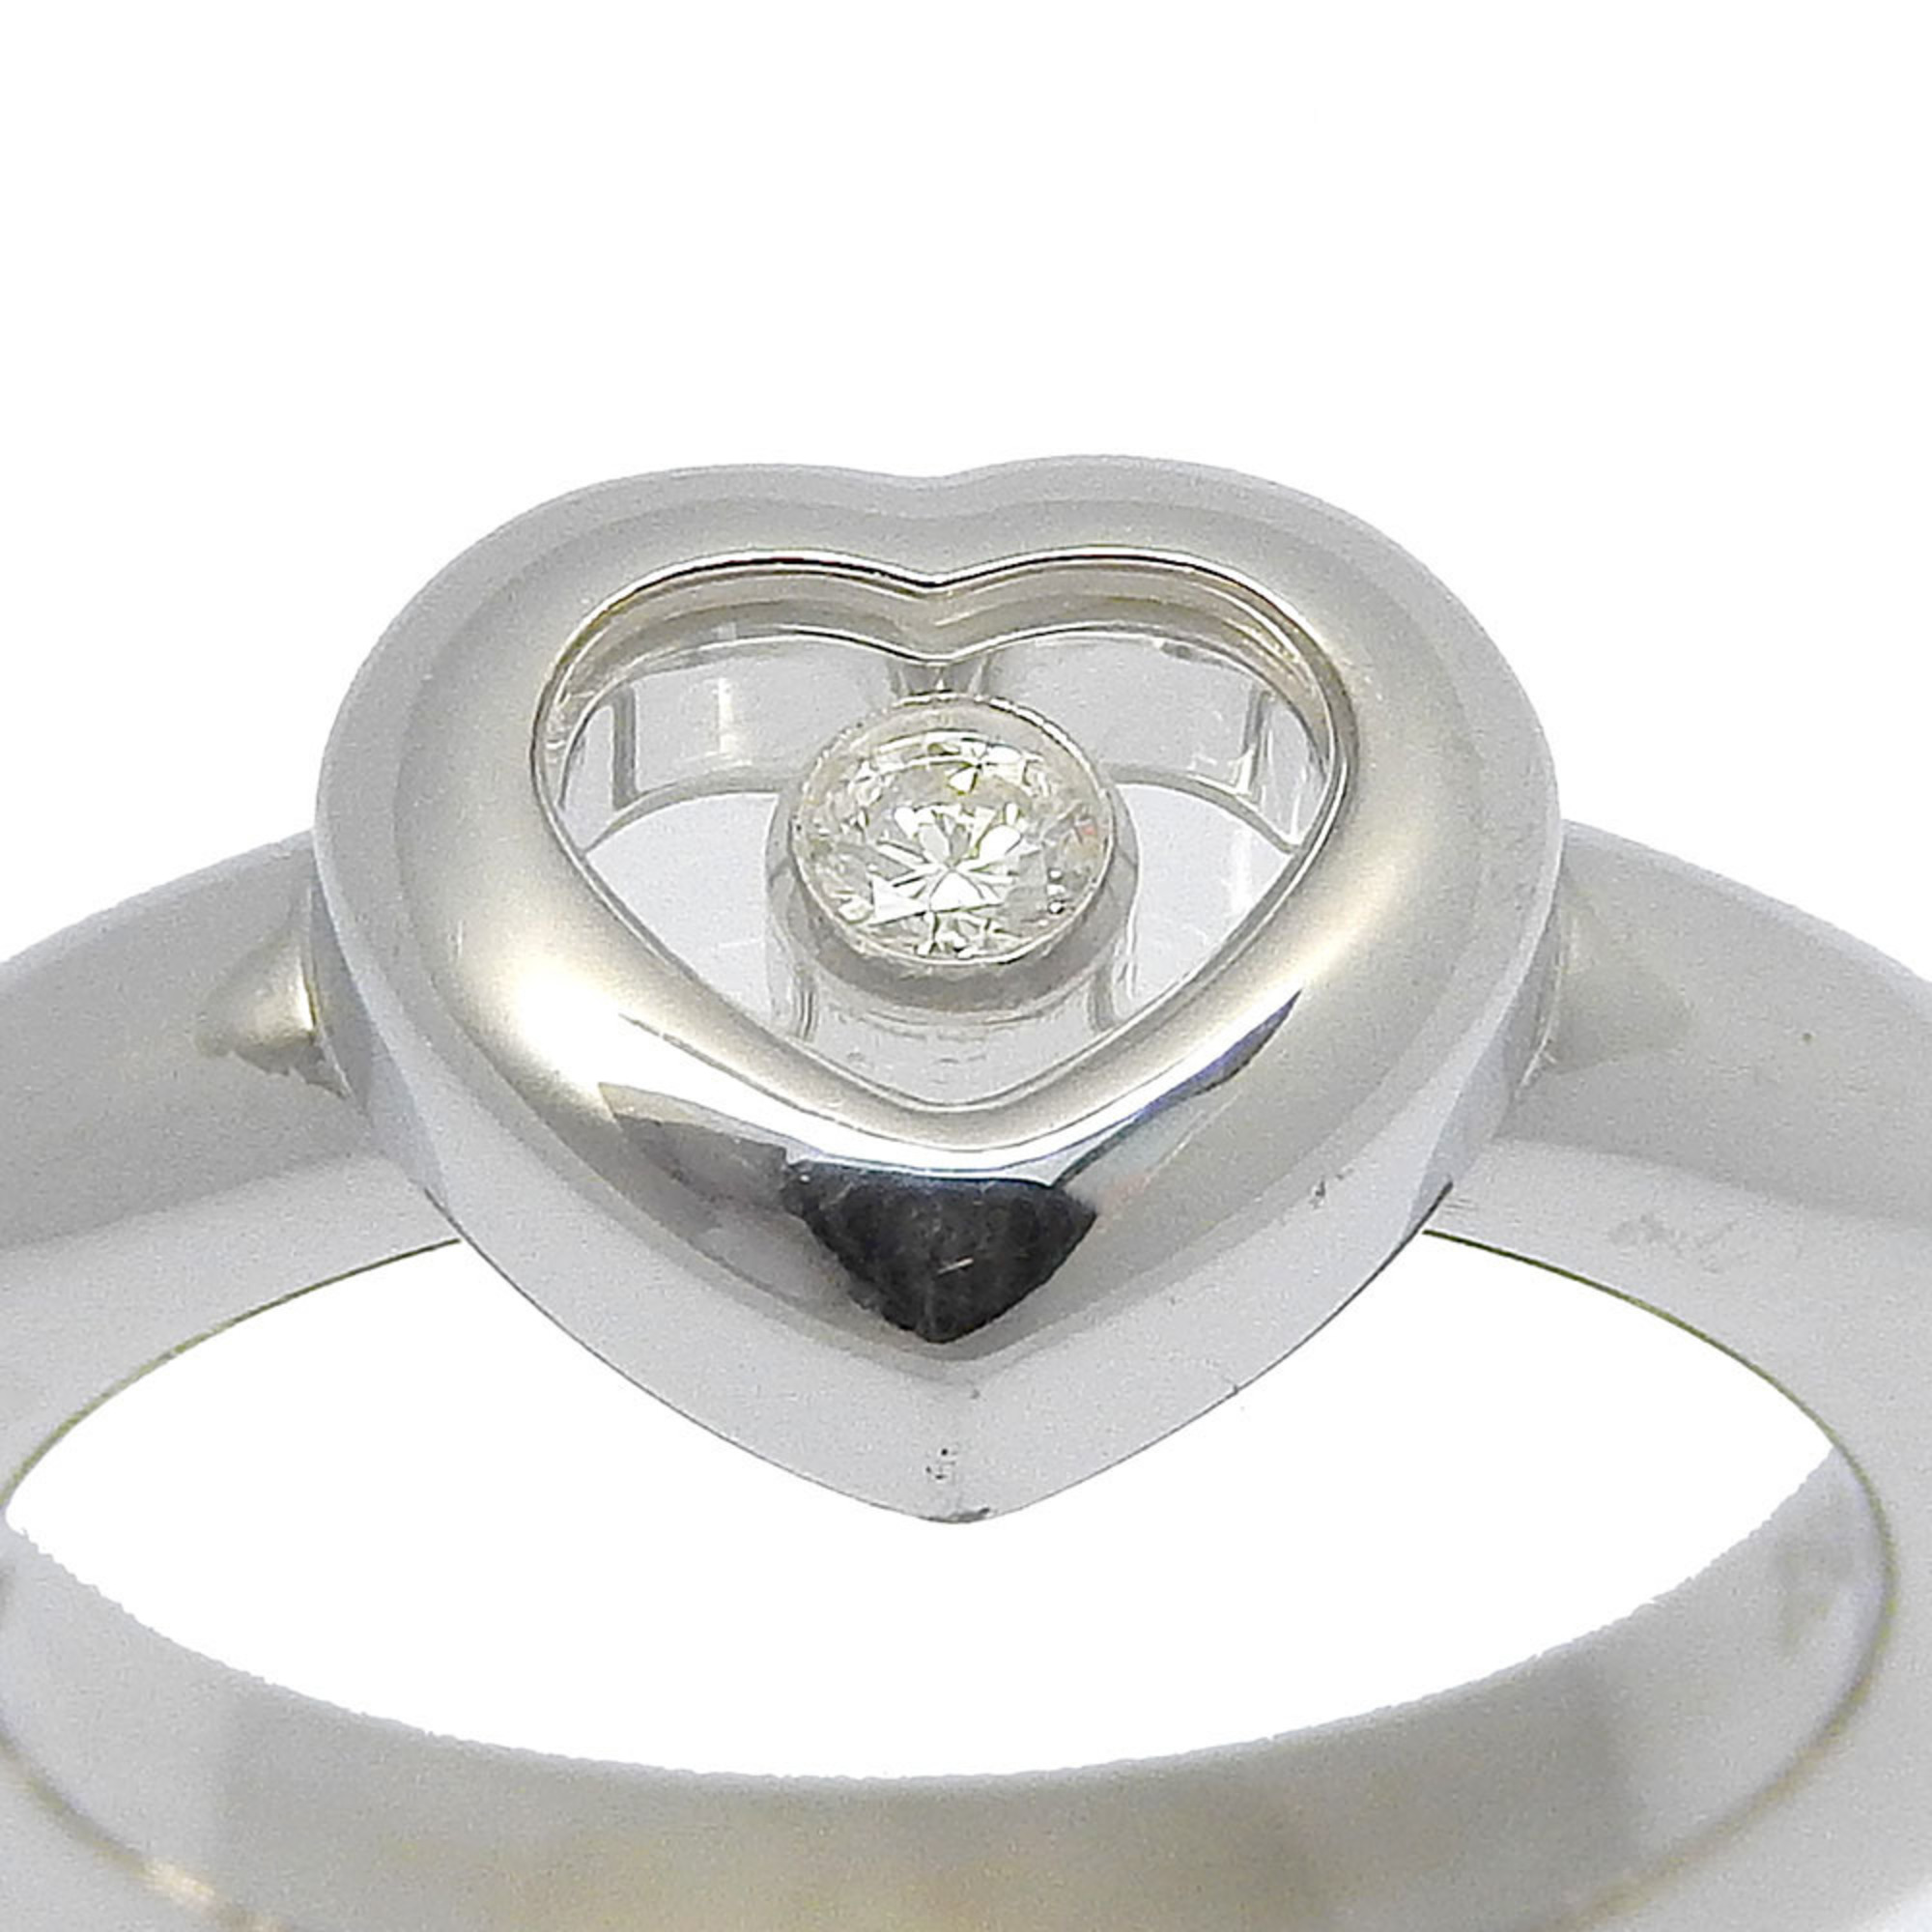 Chopard Happy Diamond size 5 ring 82/2889/20 K18 white gold heart approx. 7.3g diamond ladies